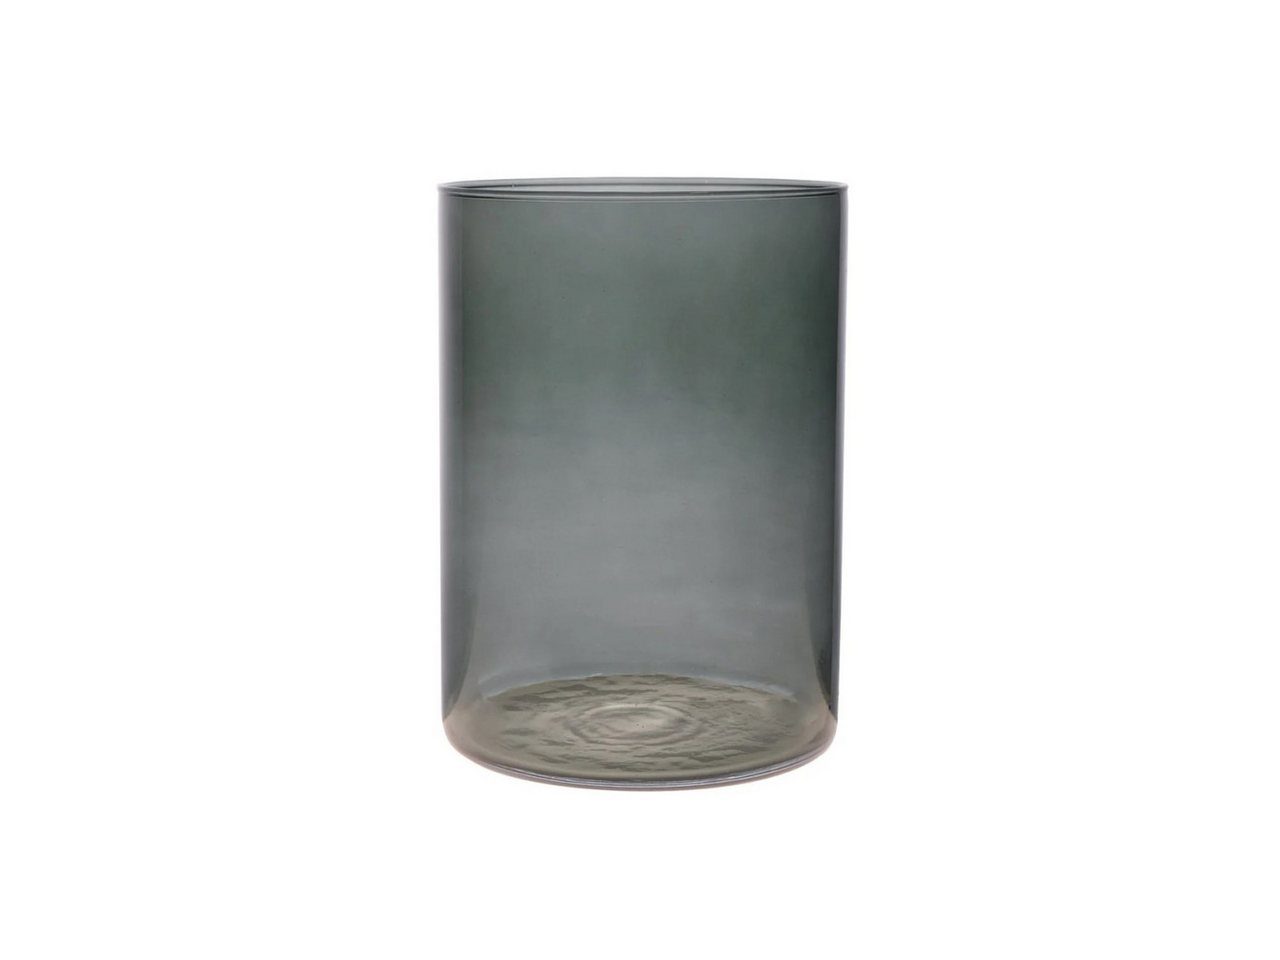 Hakbijl Glass Deko-Glas, Grau H:25cm D:18cm Glas von Hakbijl Glass